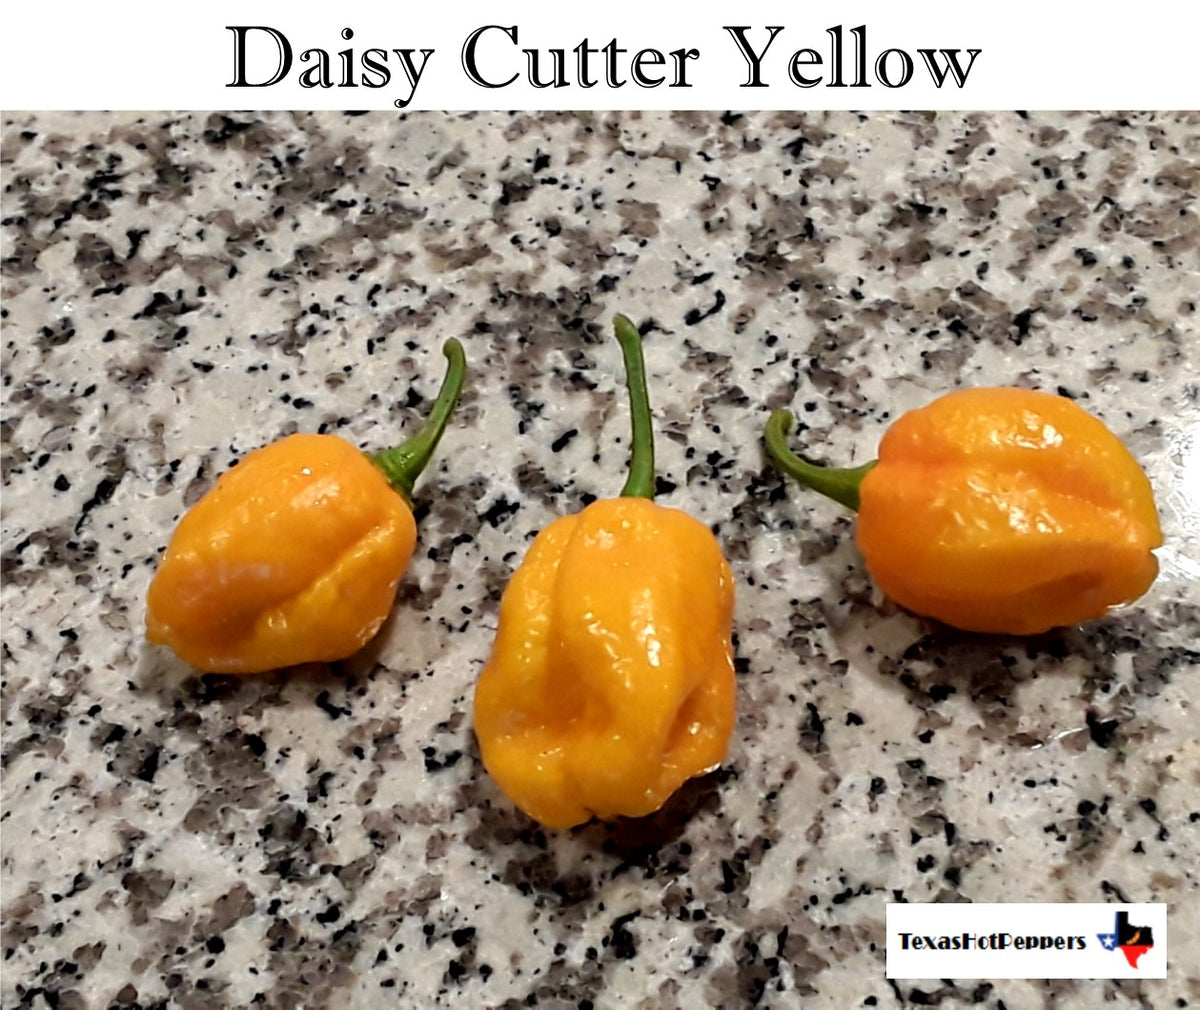 Daisy Cutter Yellow – Texas Hot Peppers